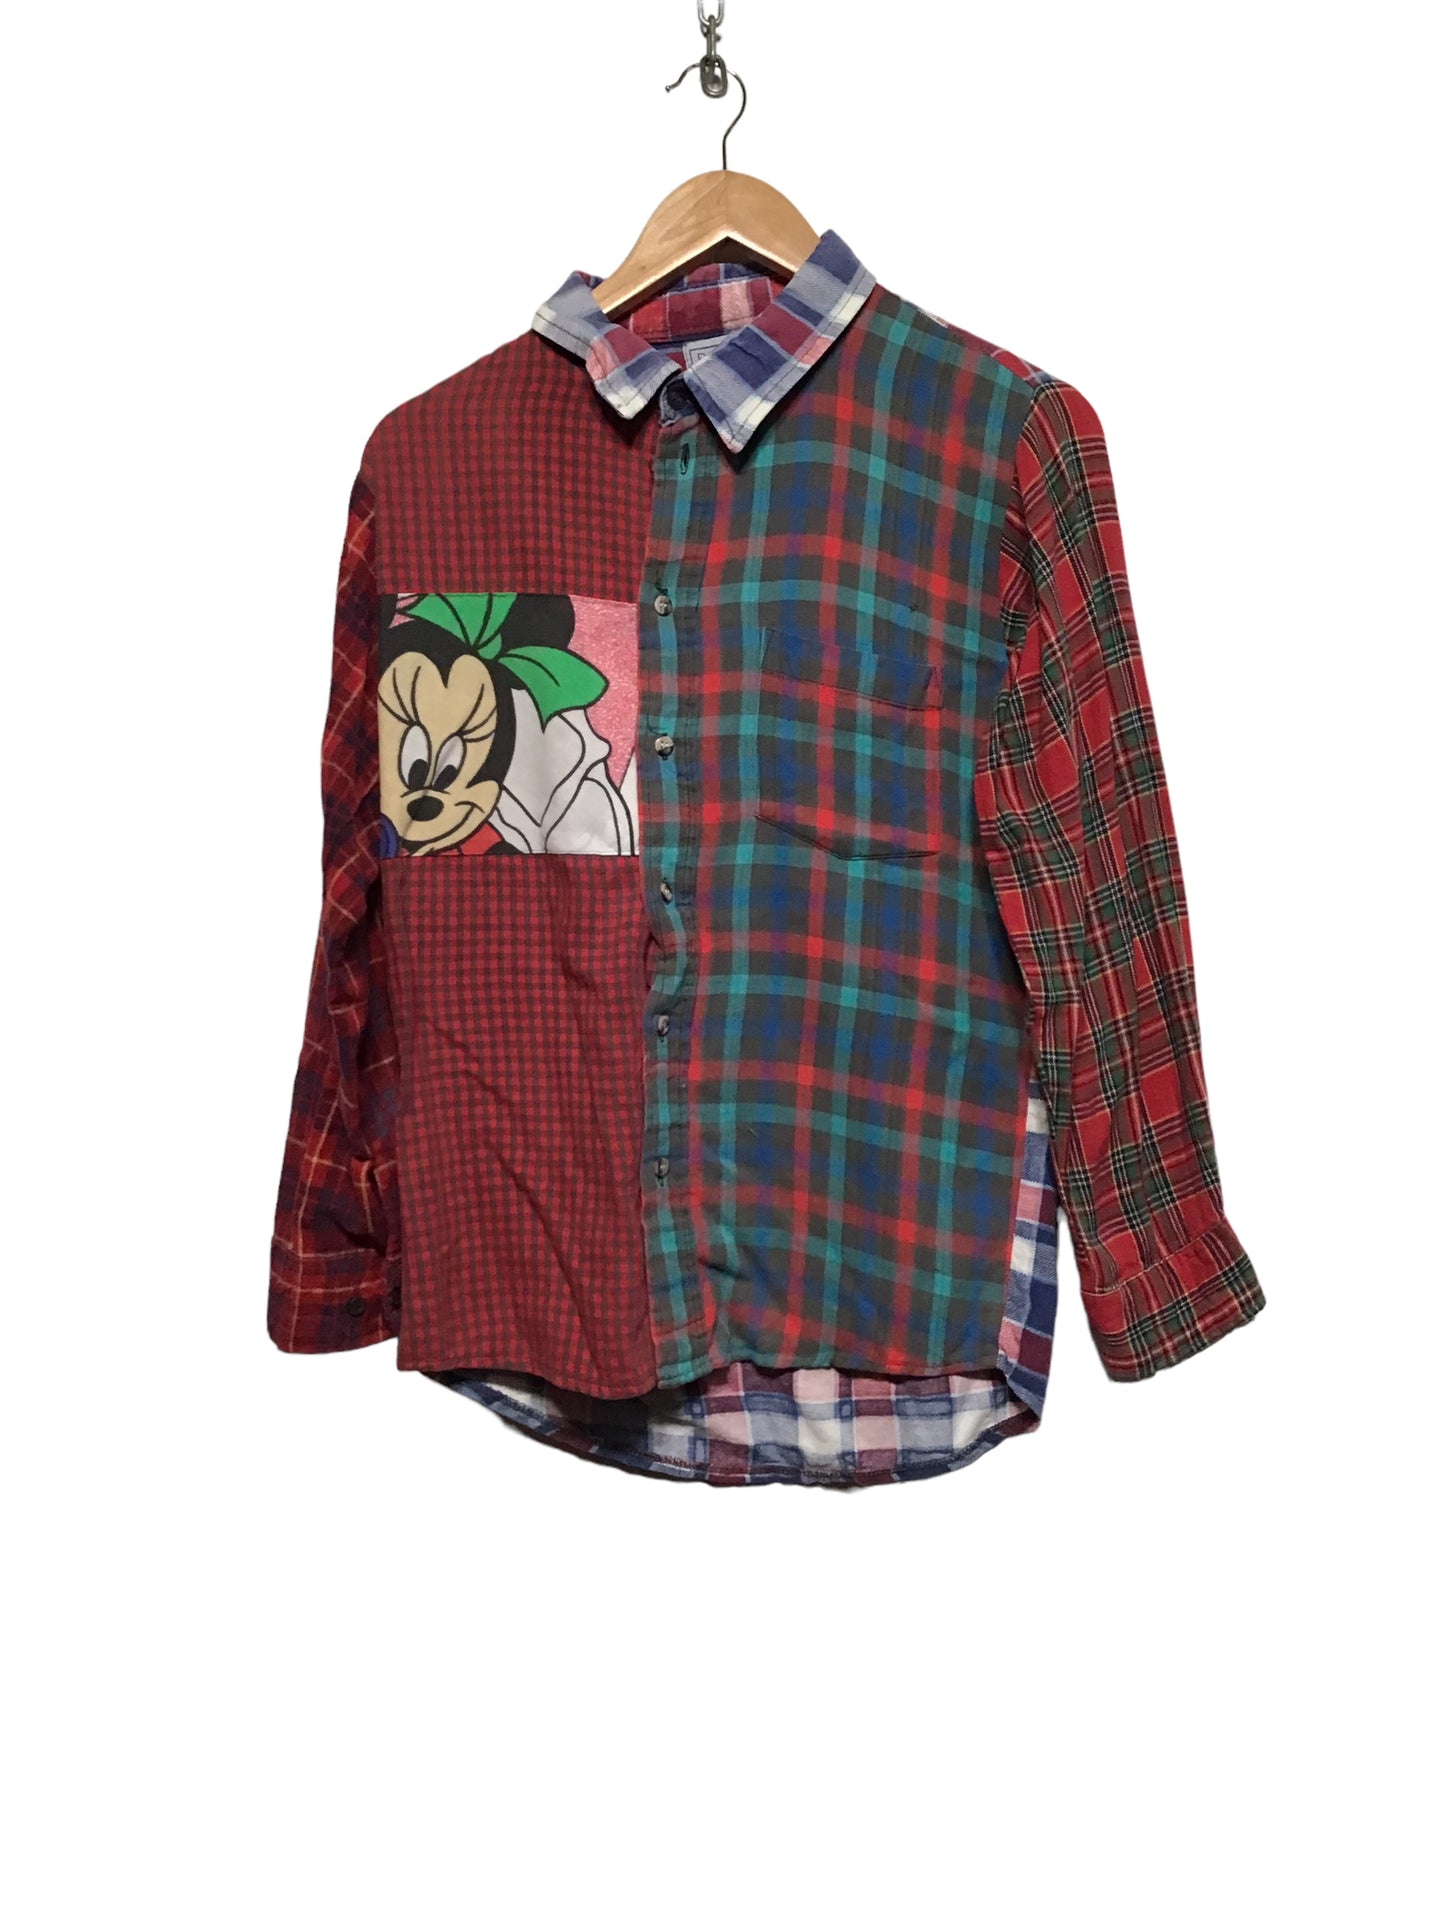 Minney Mouse Multi Patterned Check Shirt (Unisex Size S)